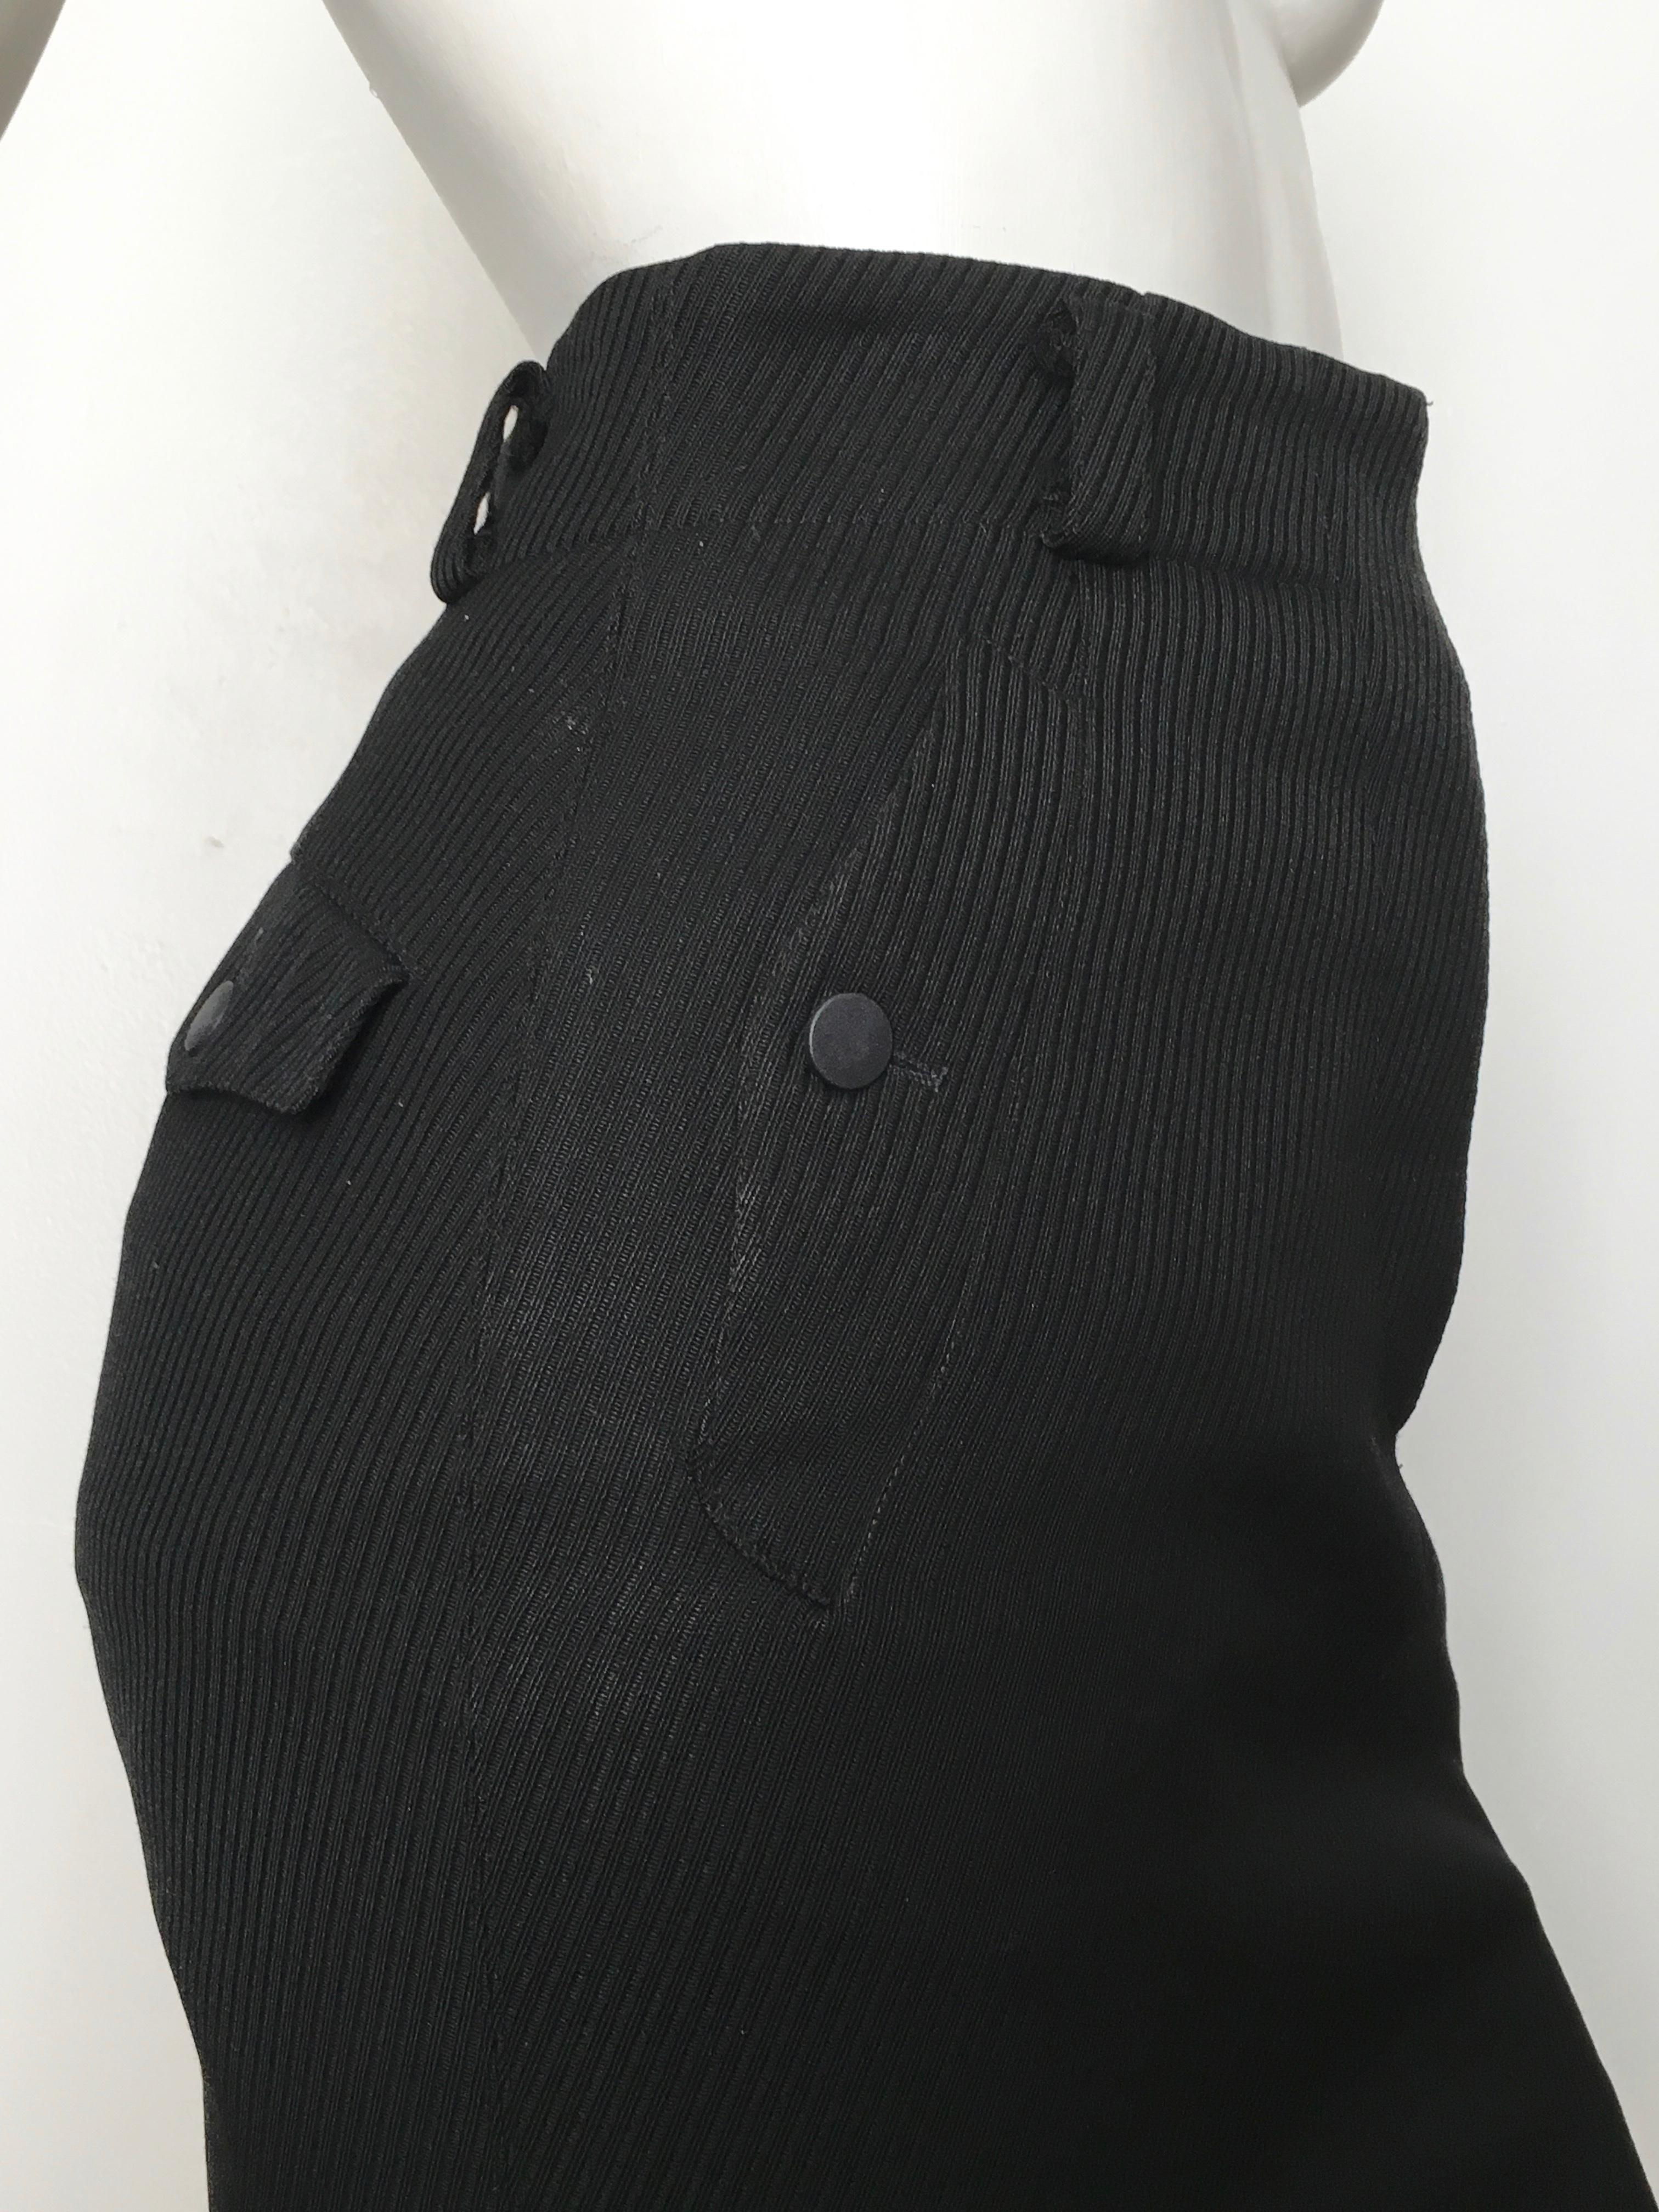 Azzedine Alaia 1980s Black Pencil Skirt with Pockets Size 4. 1